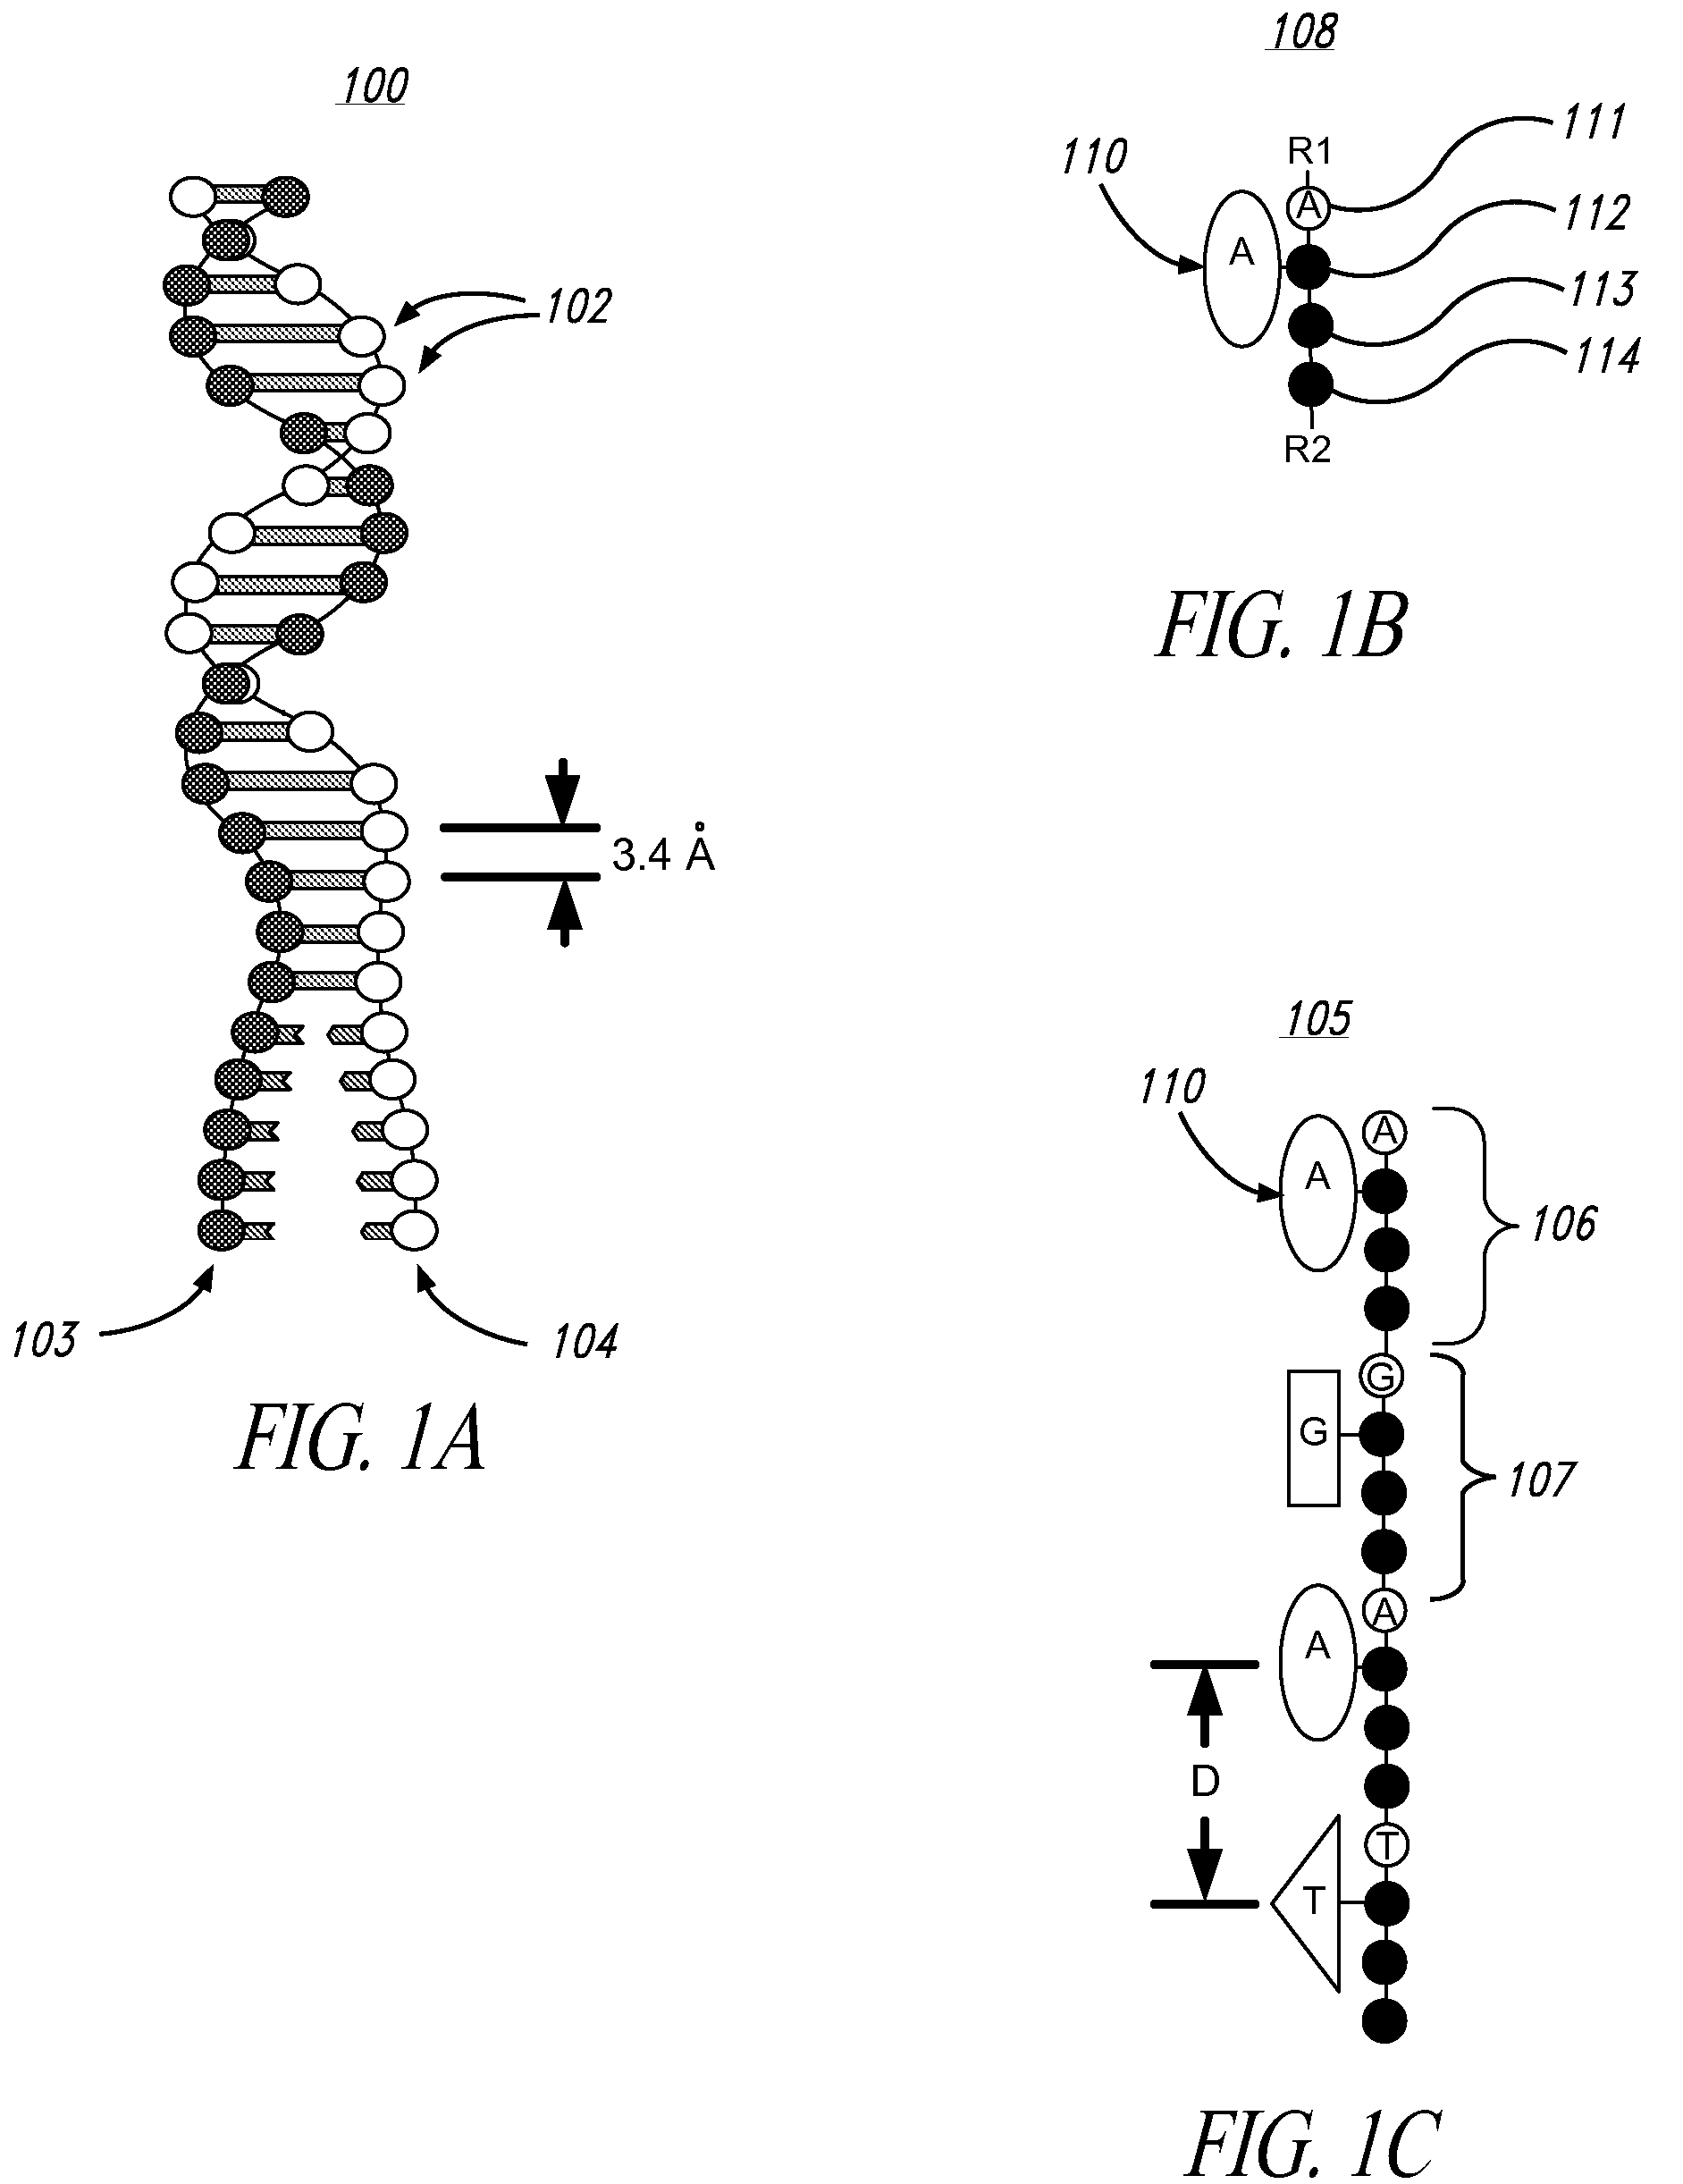 High throughput nucleic acid sequencing by spacing